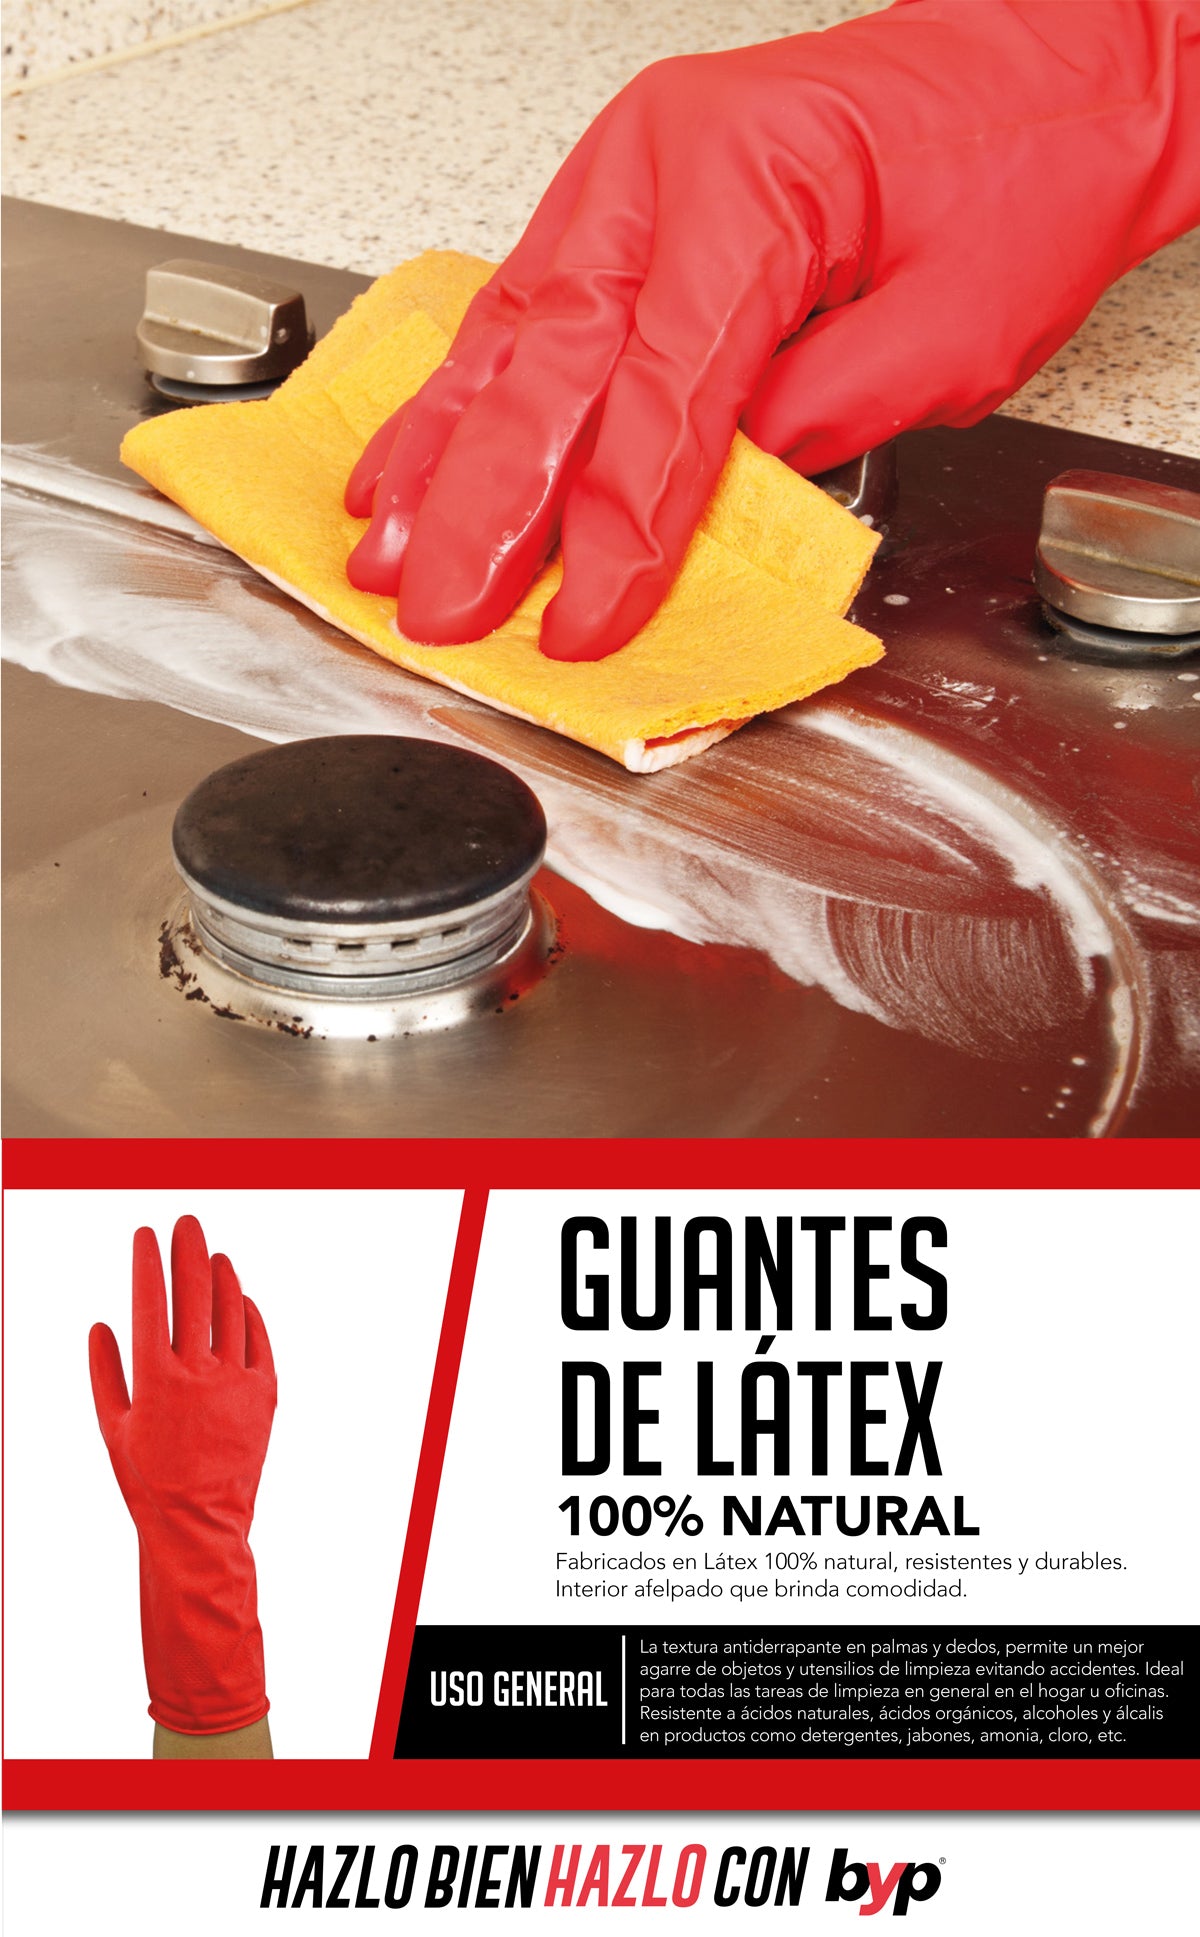 Guantes de latex | byp